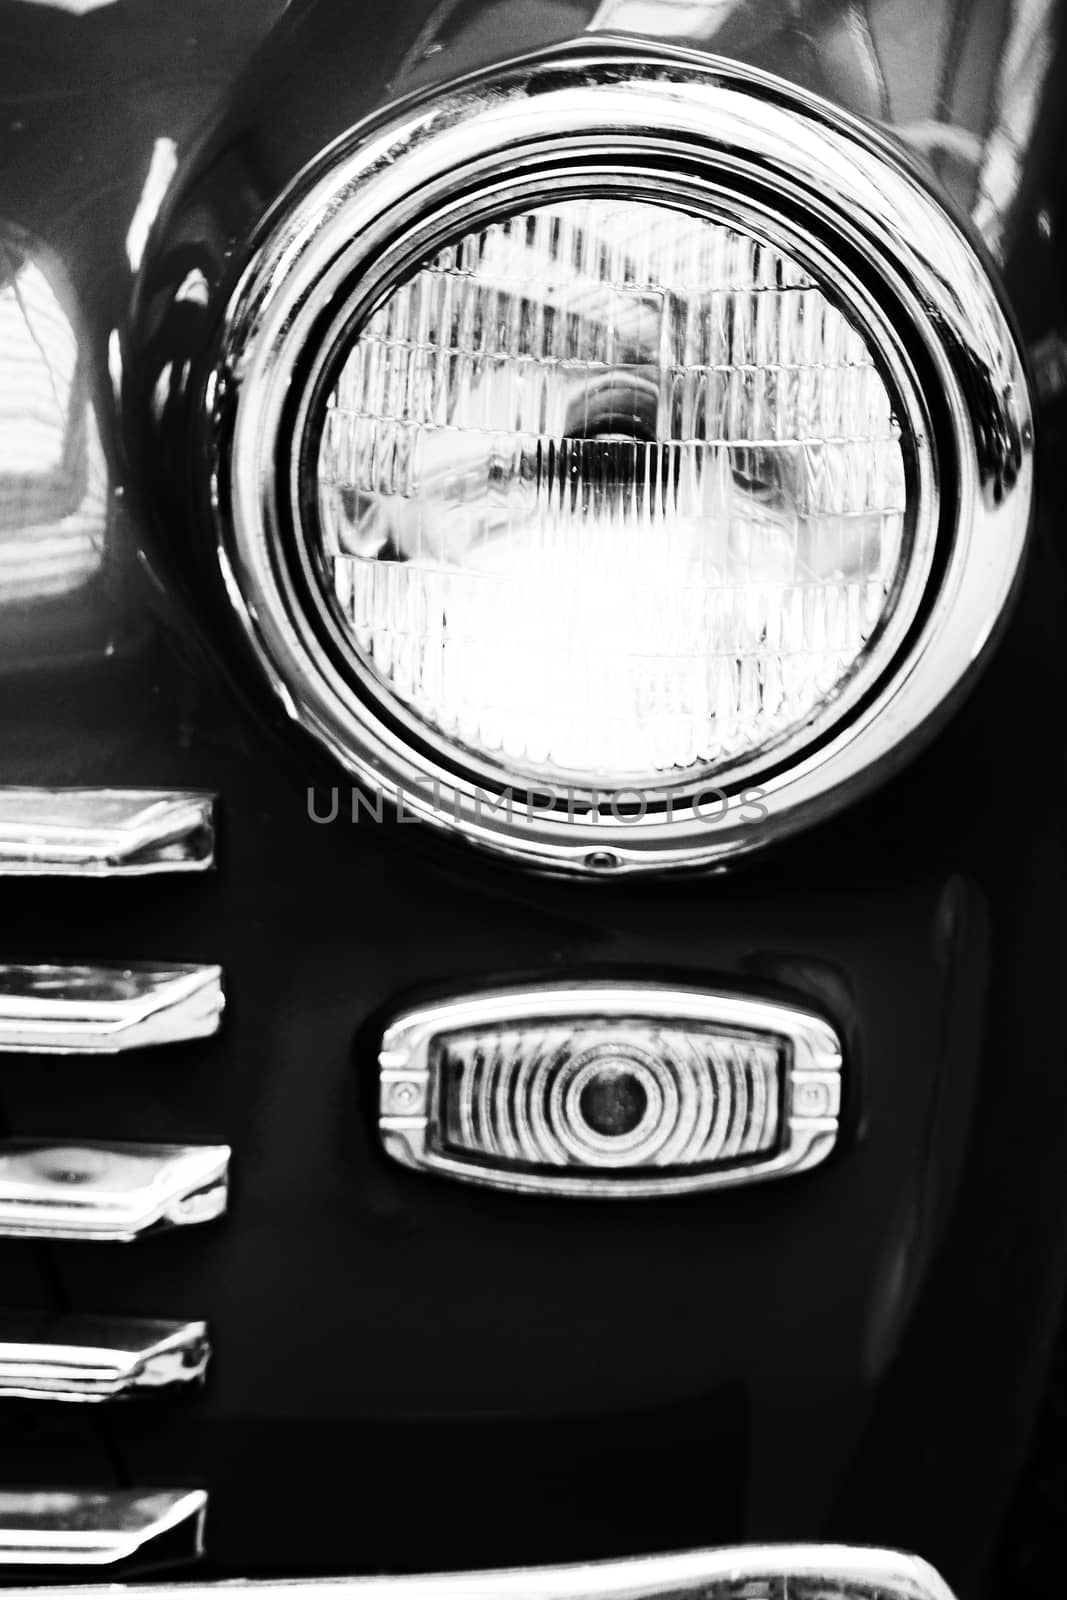 Retro car headlight close up photo. Right headlamp of old car black and white